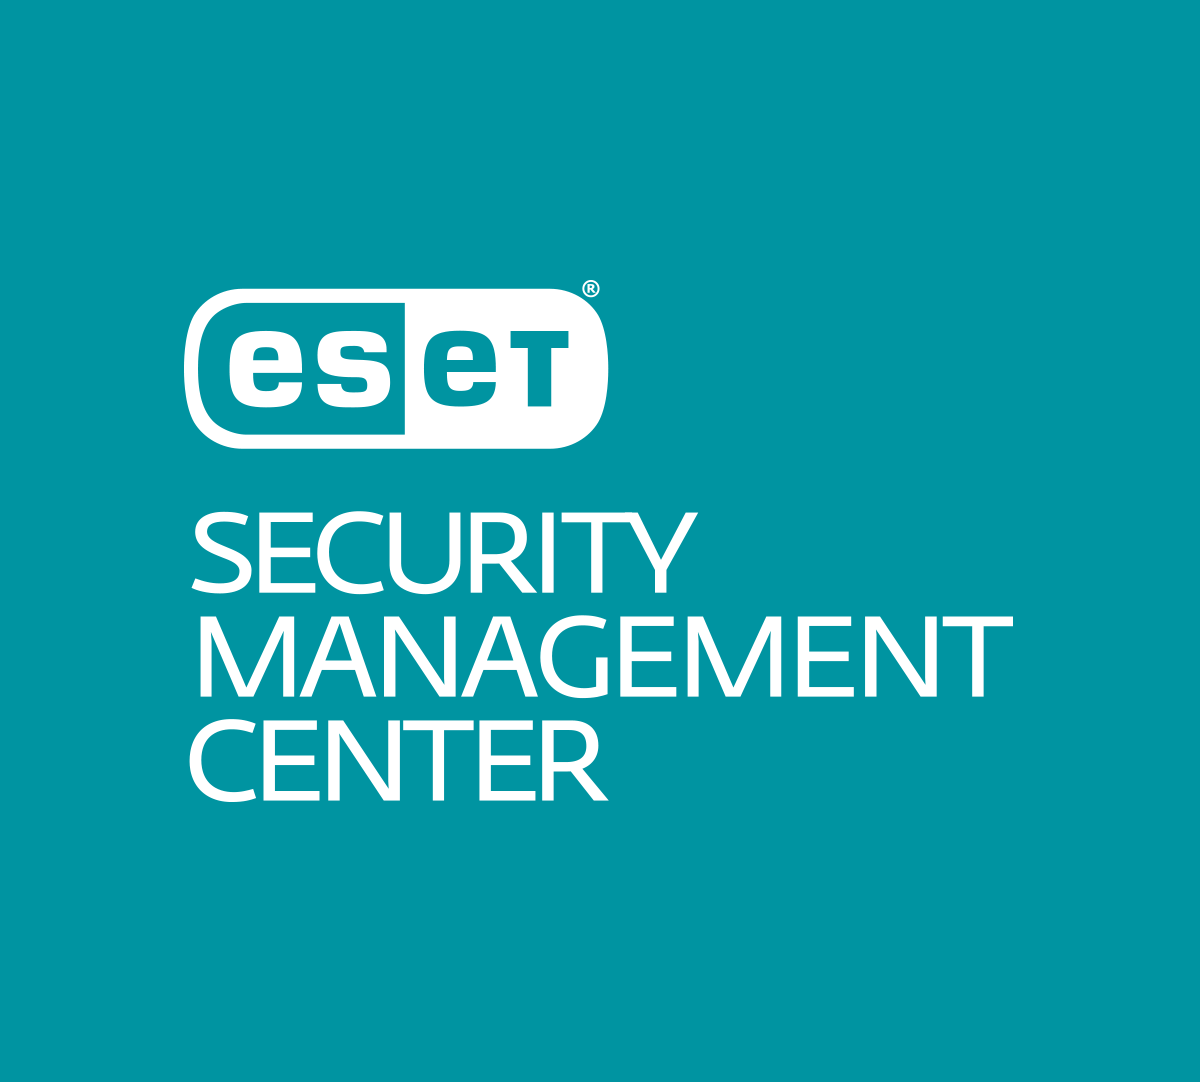 ESET Security Management Center